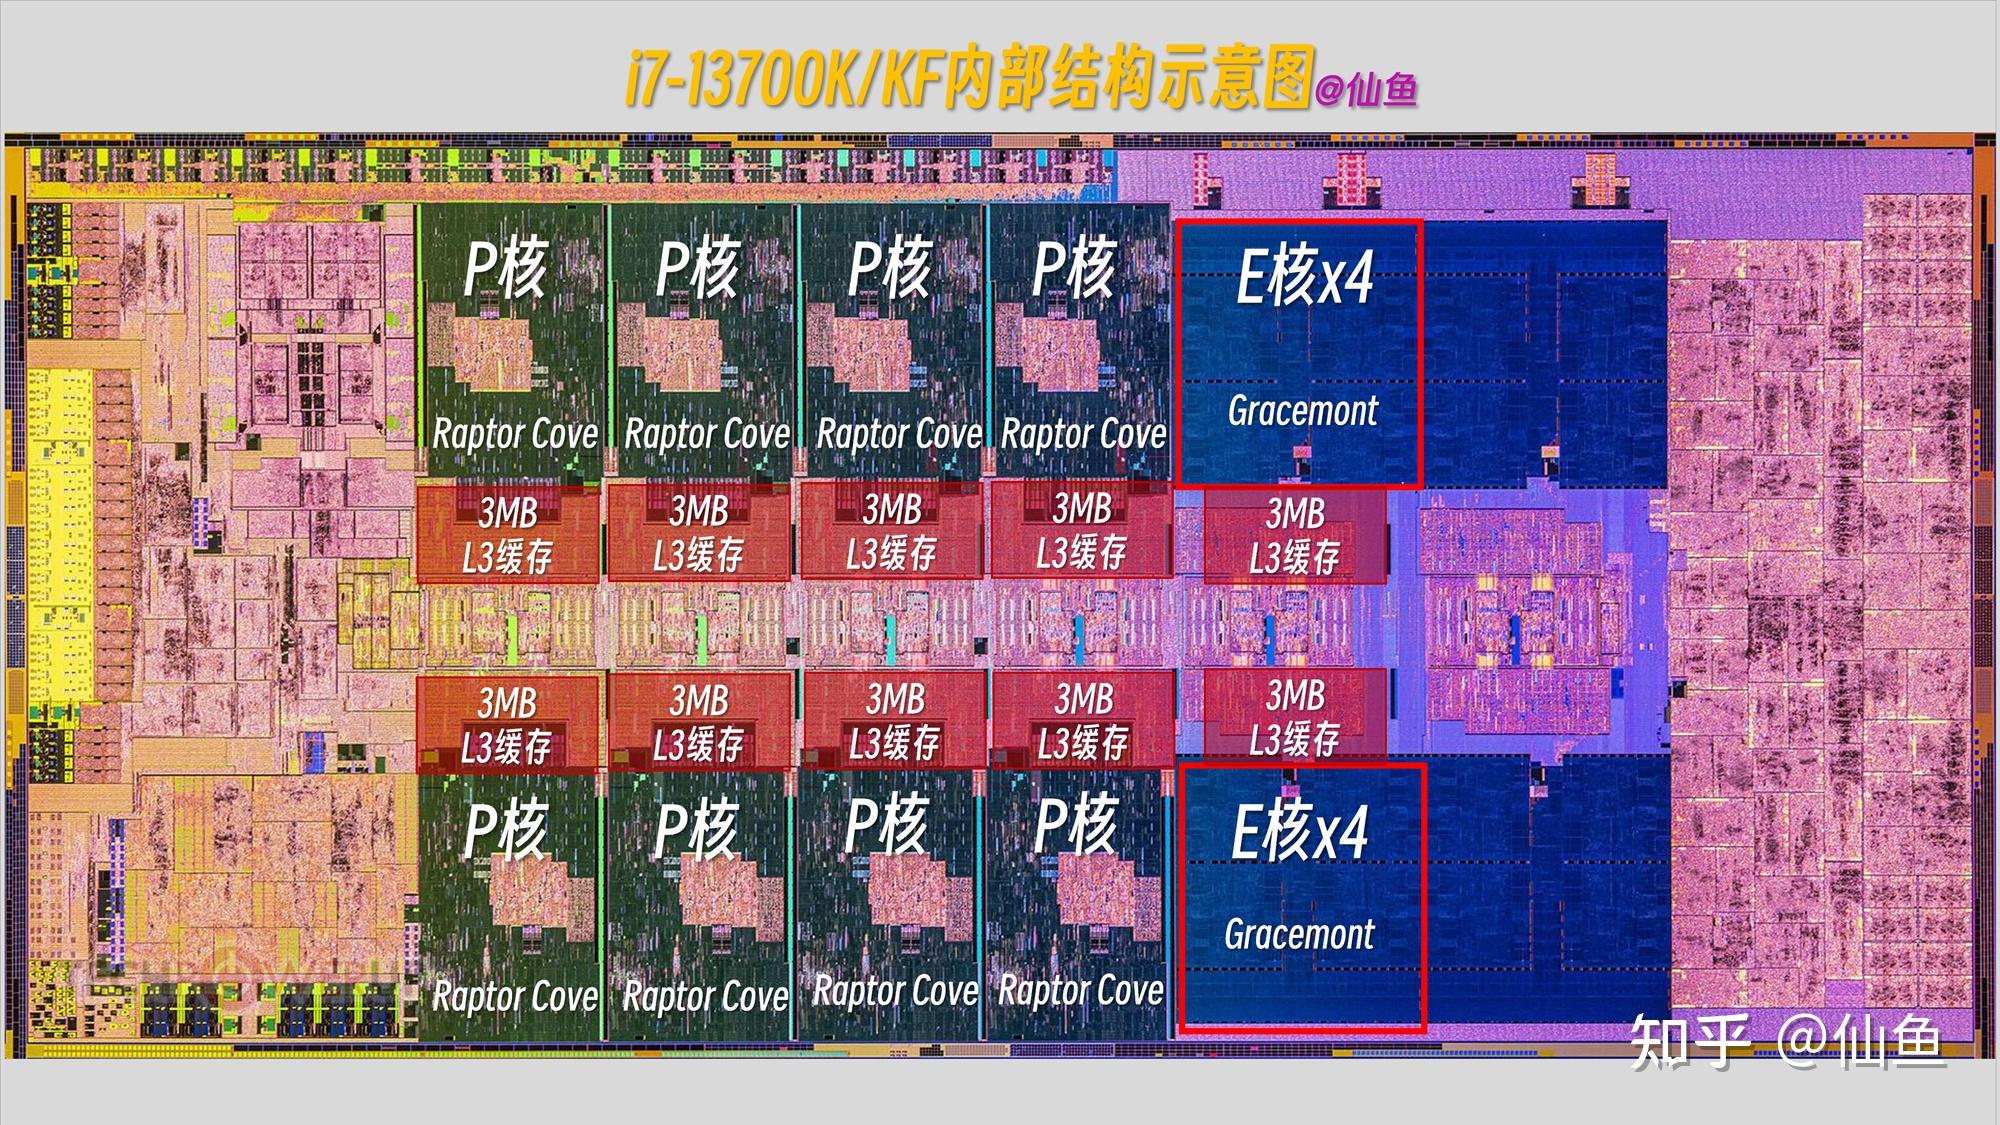 DDR3与DDR4内存：性能差异与兼容性全面解析，科技前沿探秘  第2张